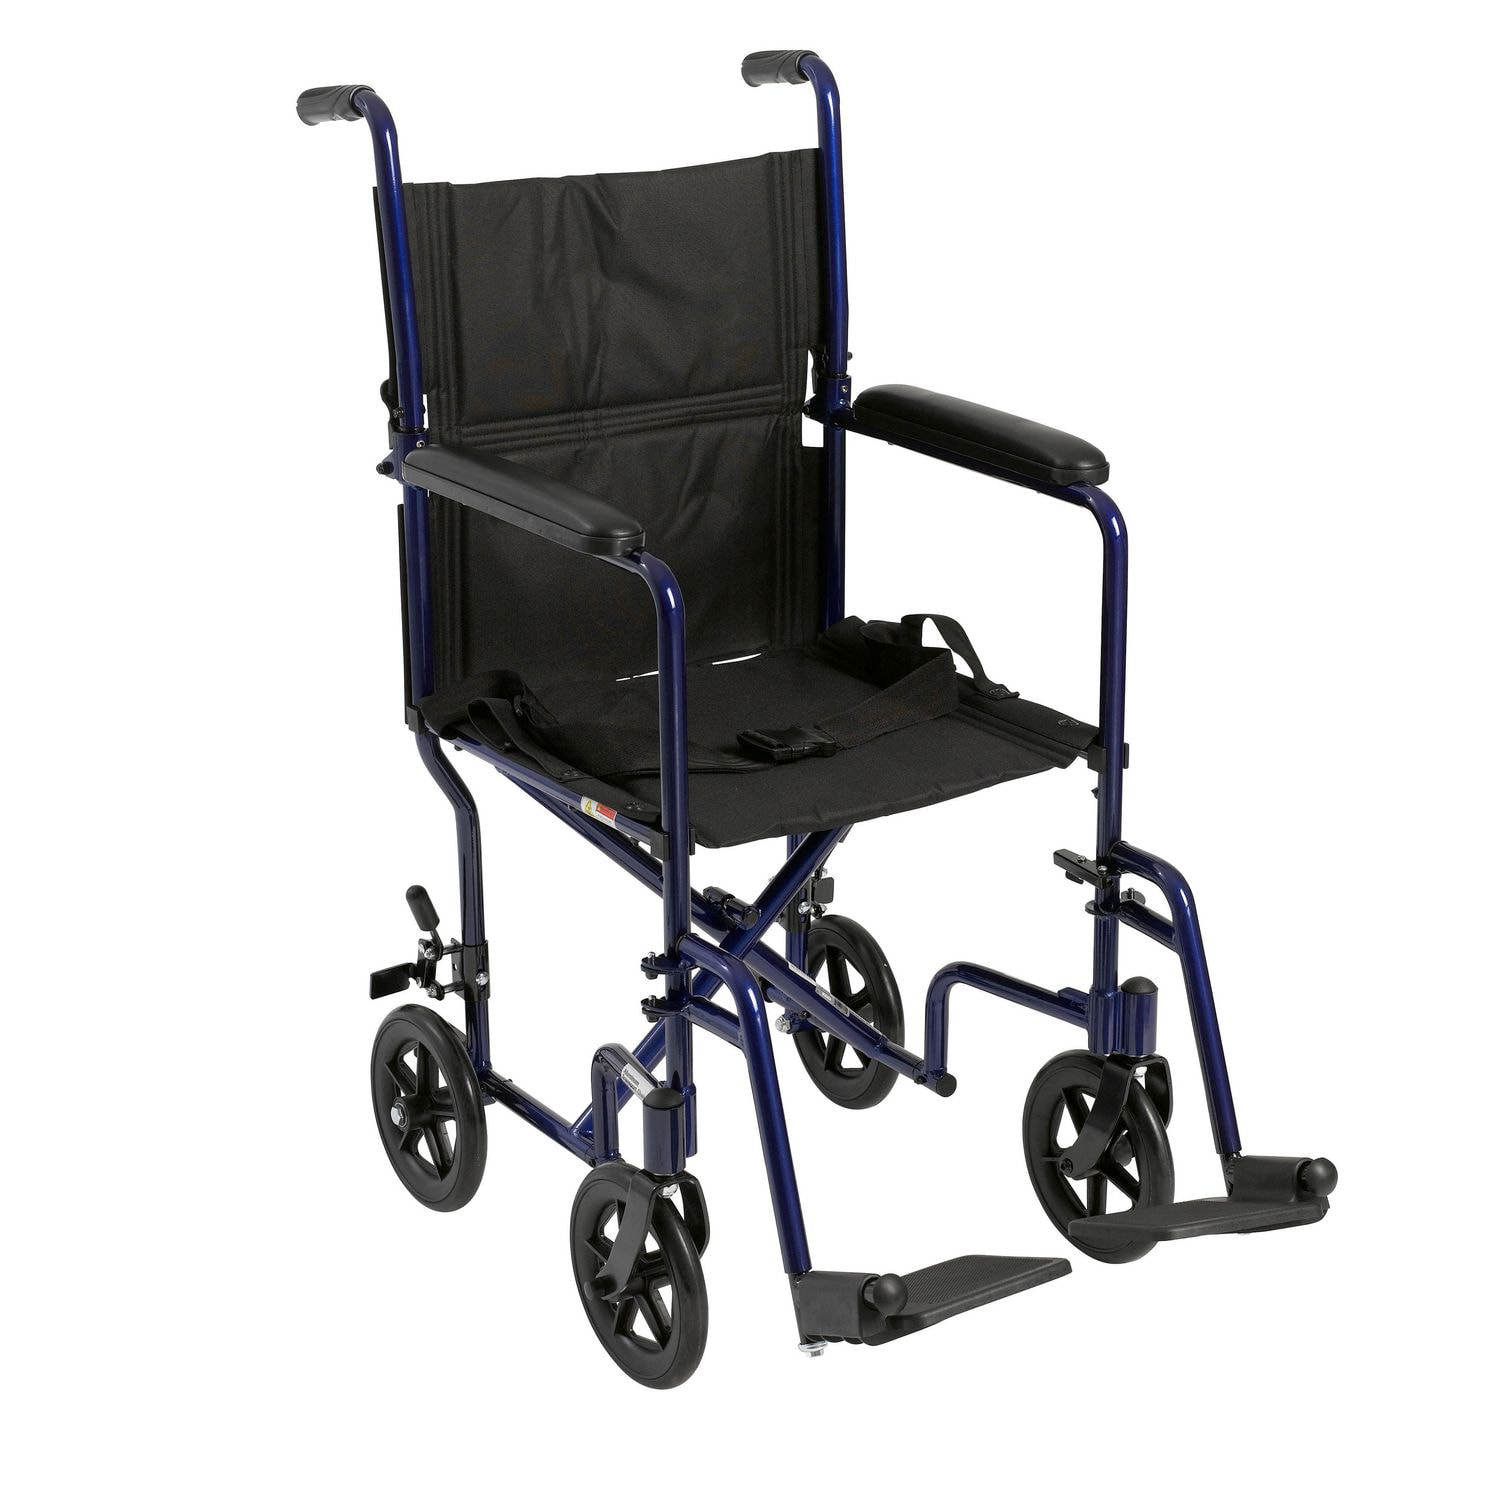 Mobility Plus Wheelchair by Medline, Black Frame